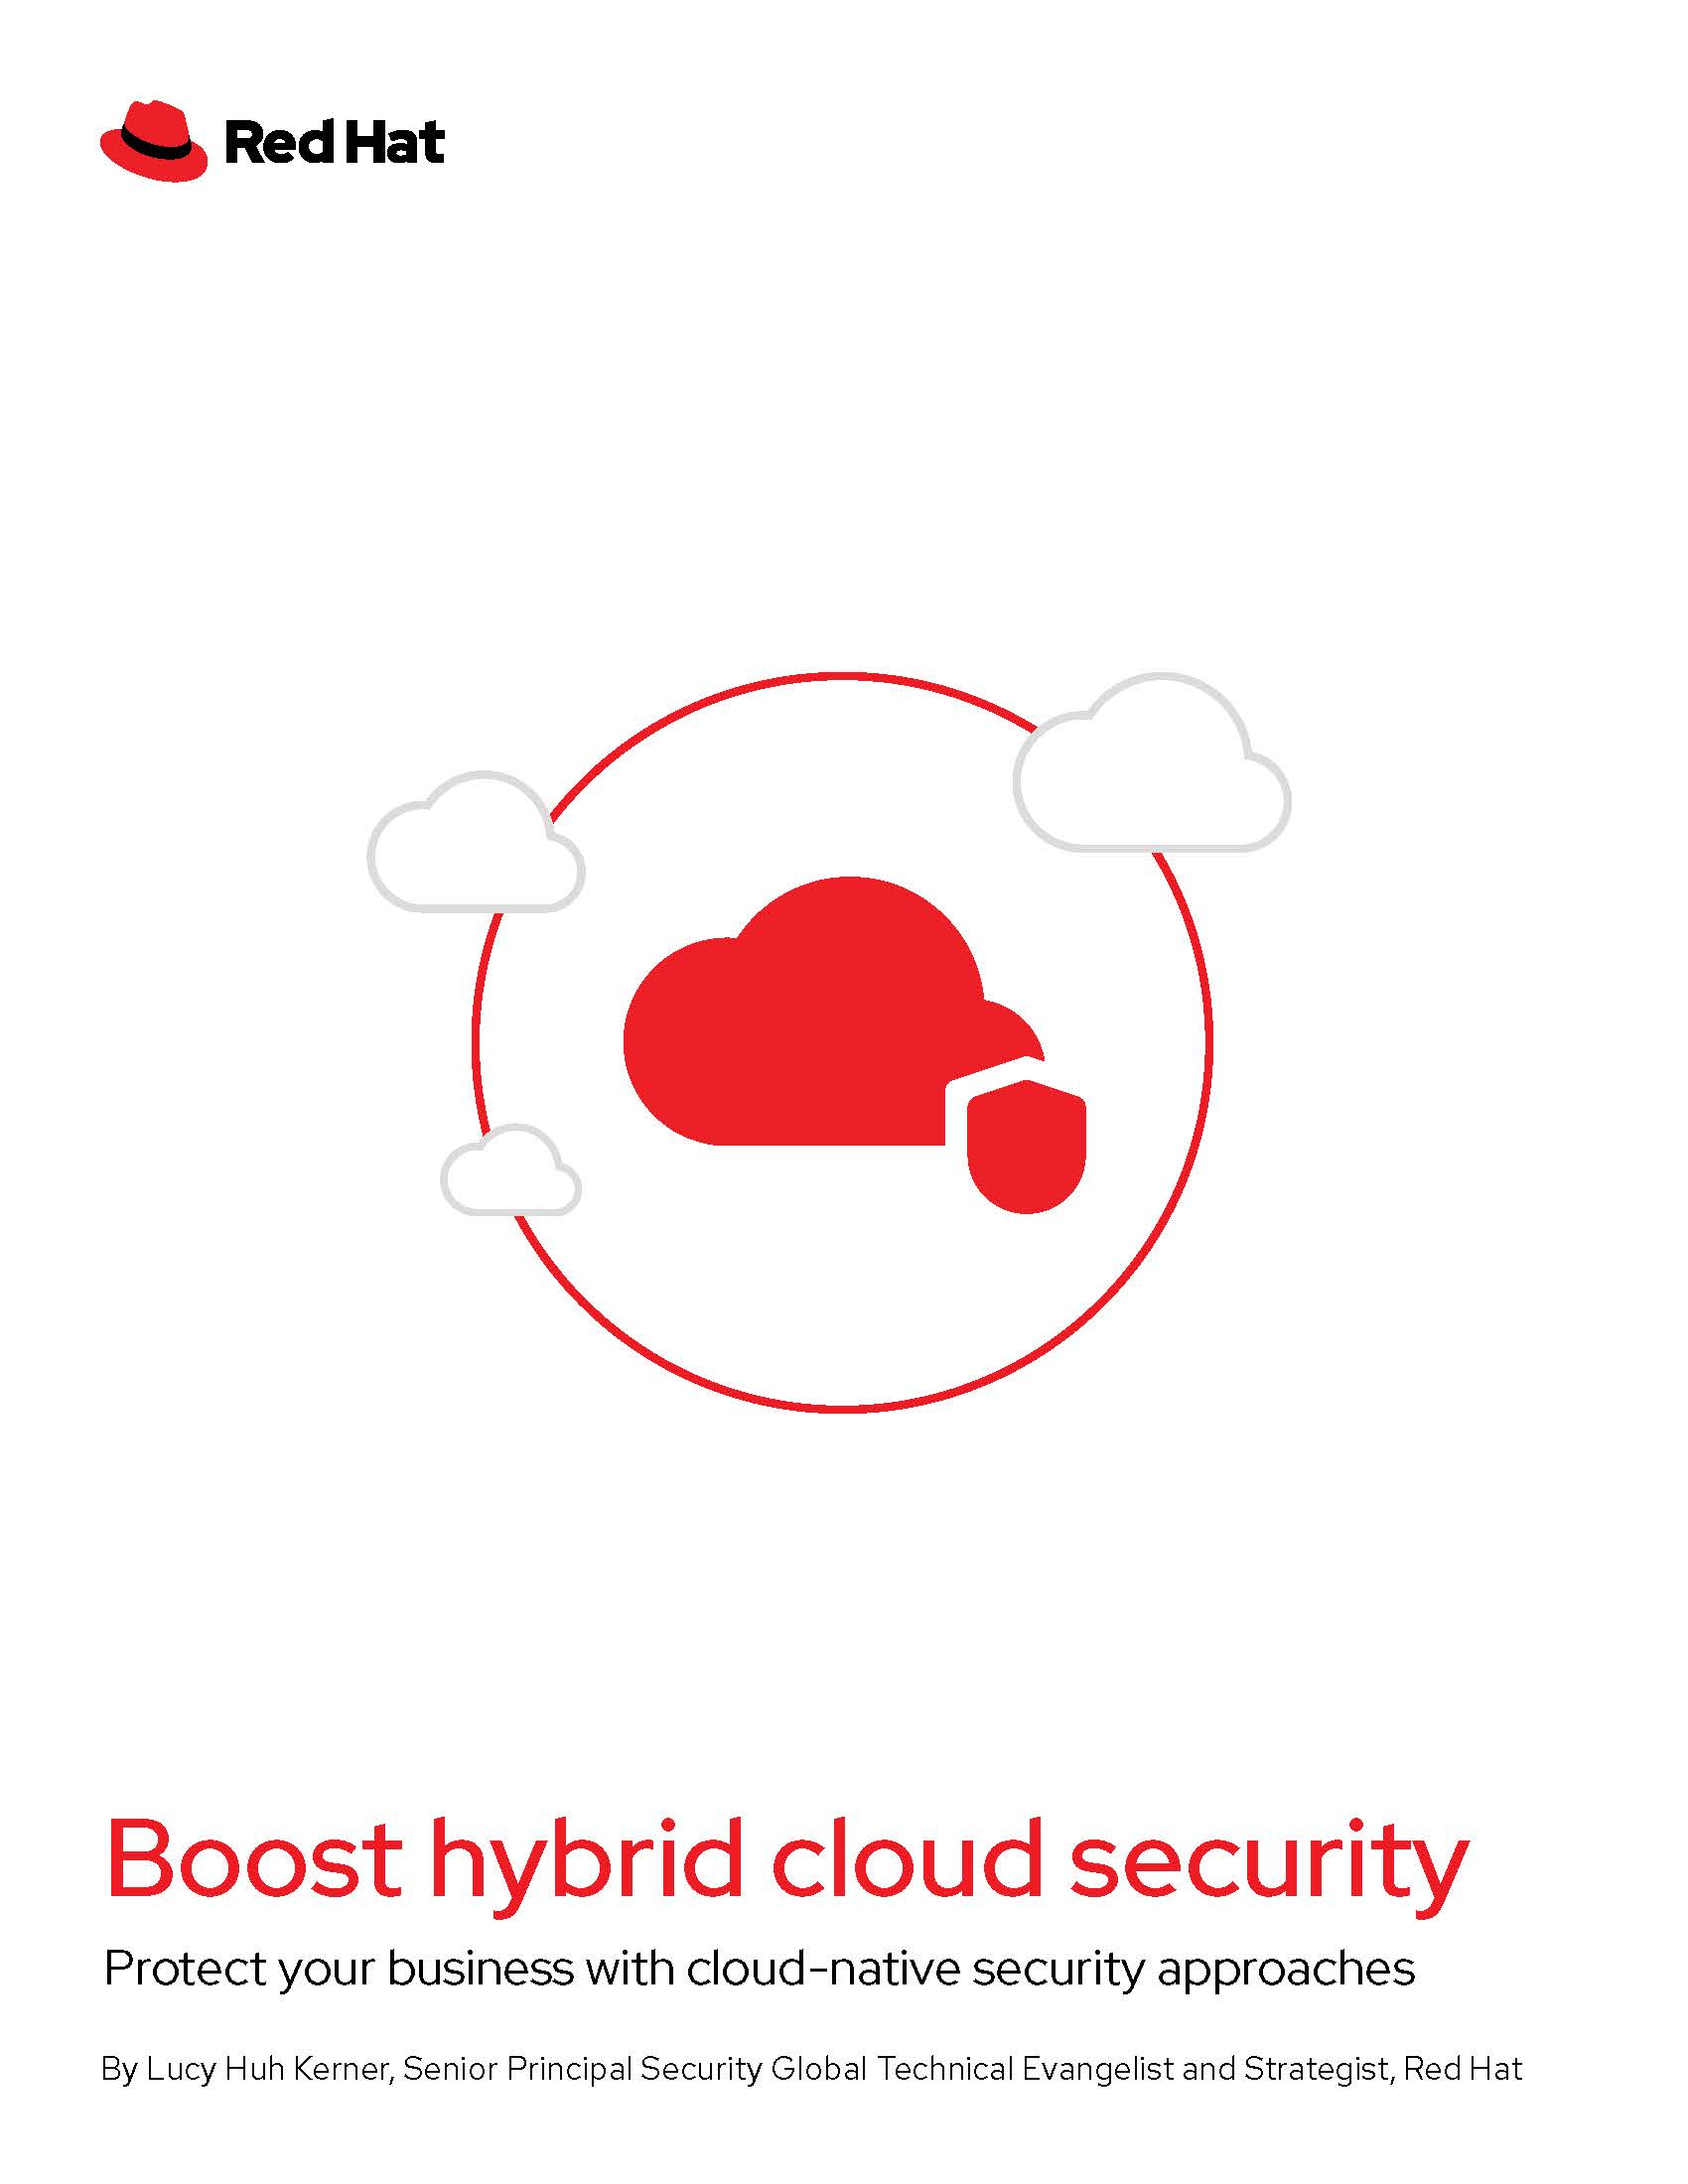 cl-hybrid-cloud-security-ebook-f18867-202002-en_Page_1